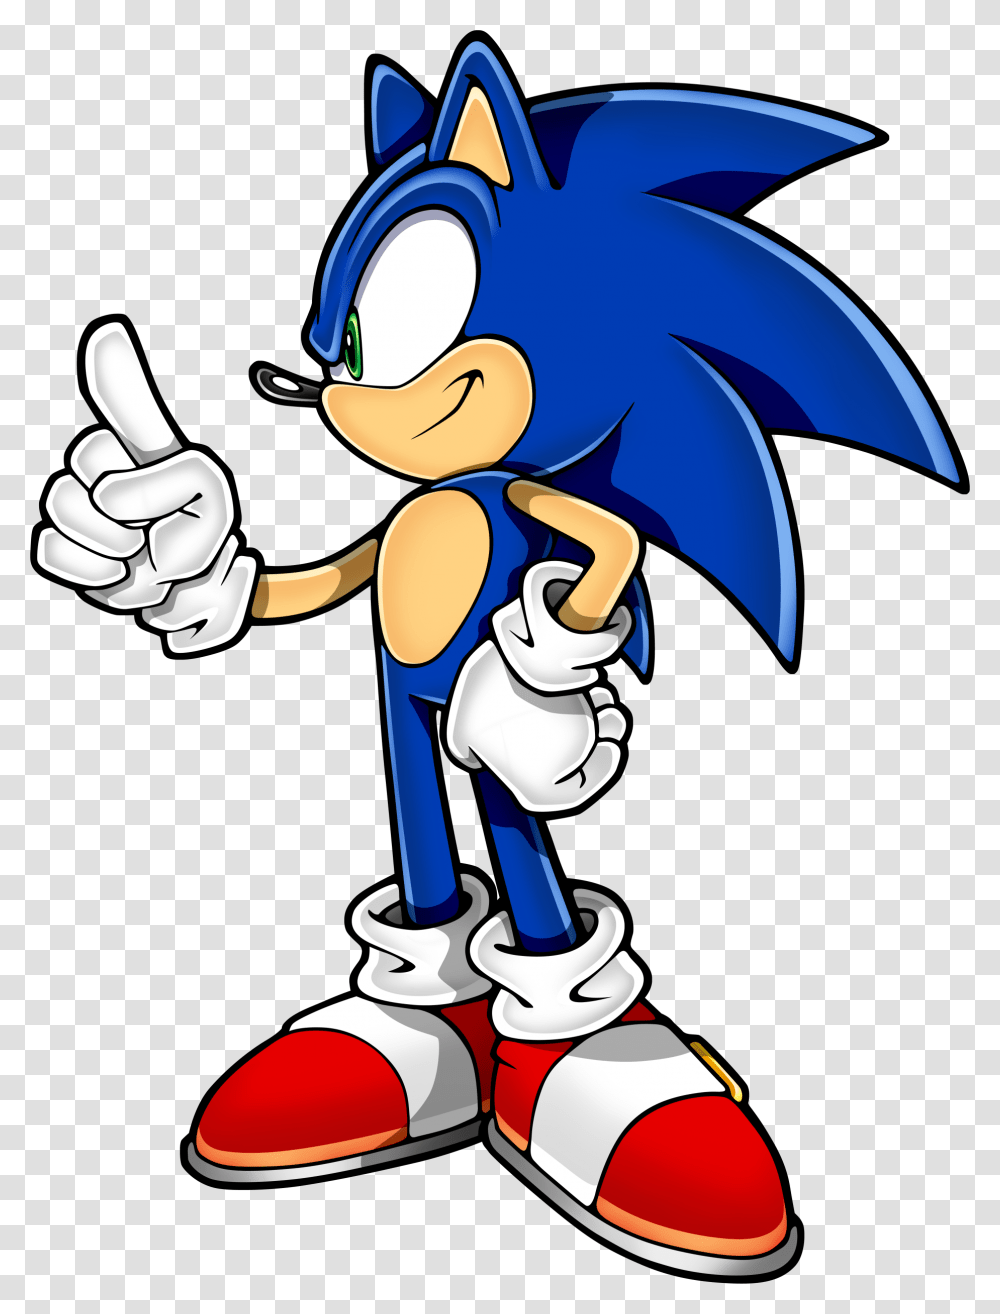 Sonic The Hedgehog Image, Hand, Performer Transparent Png